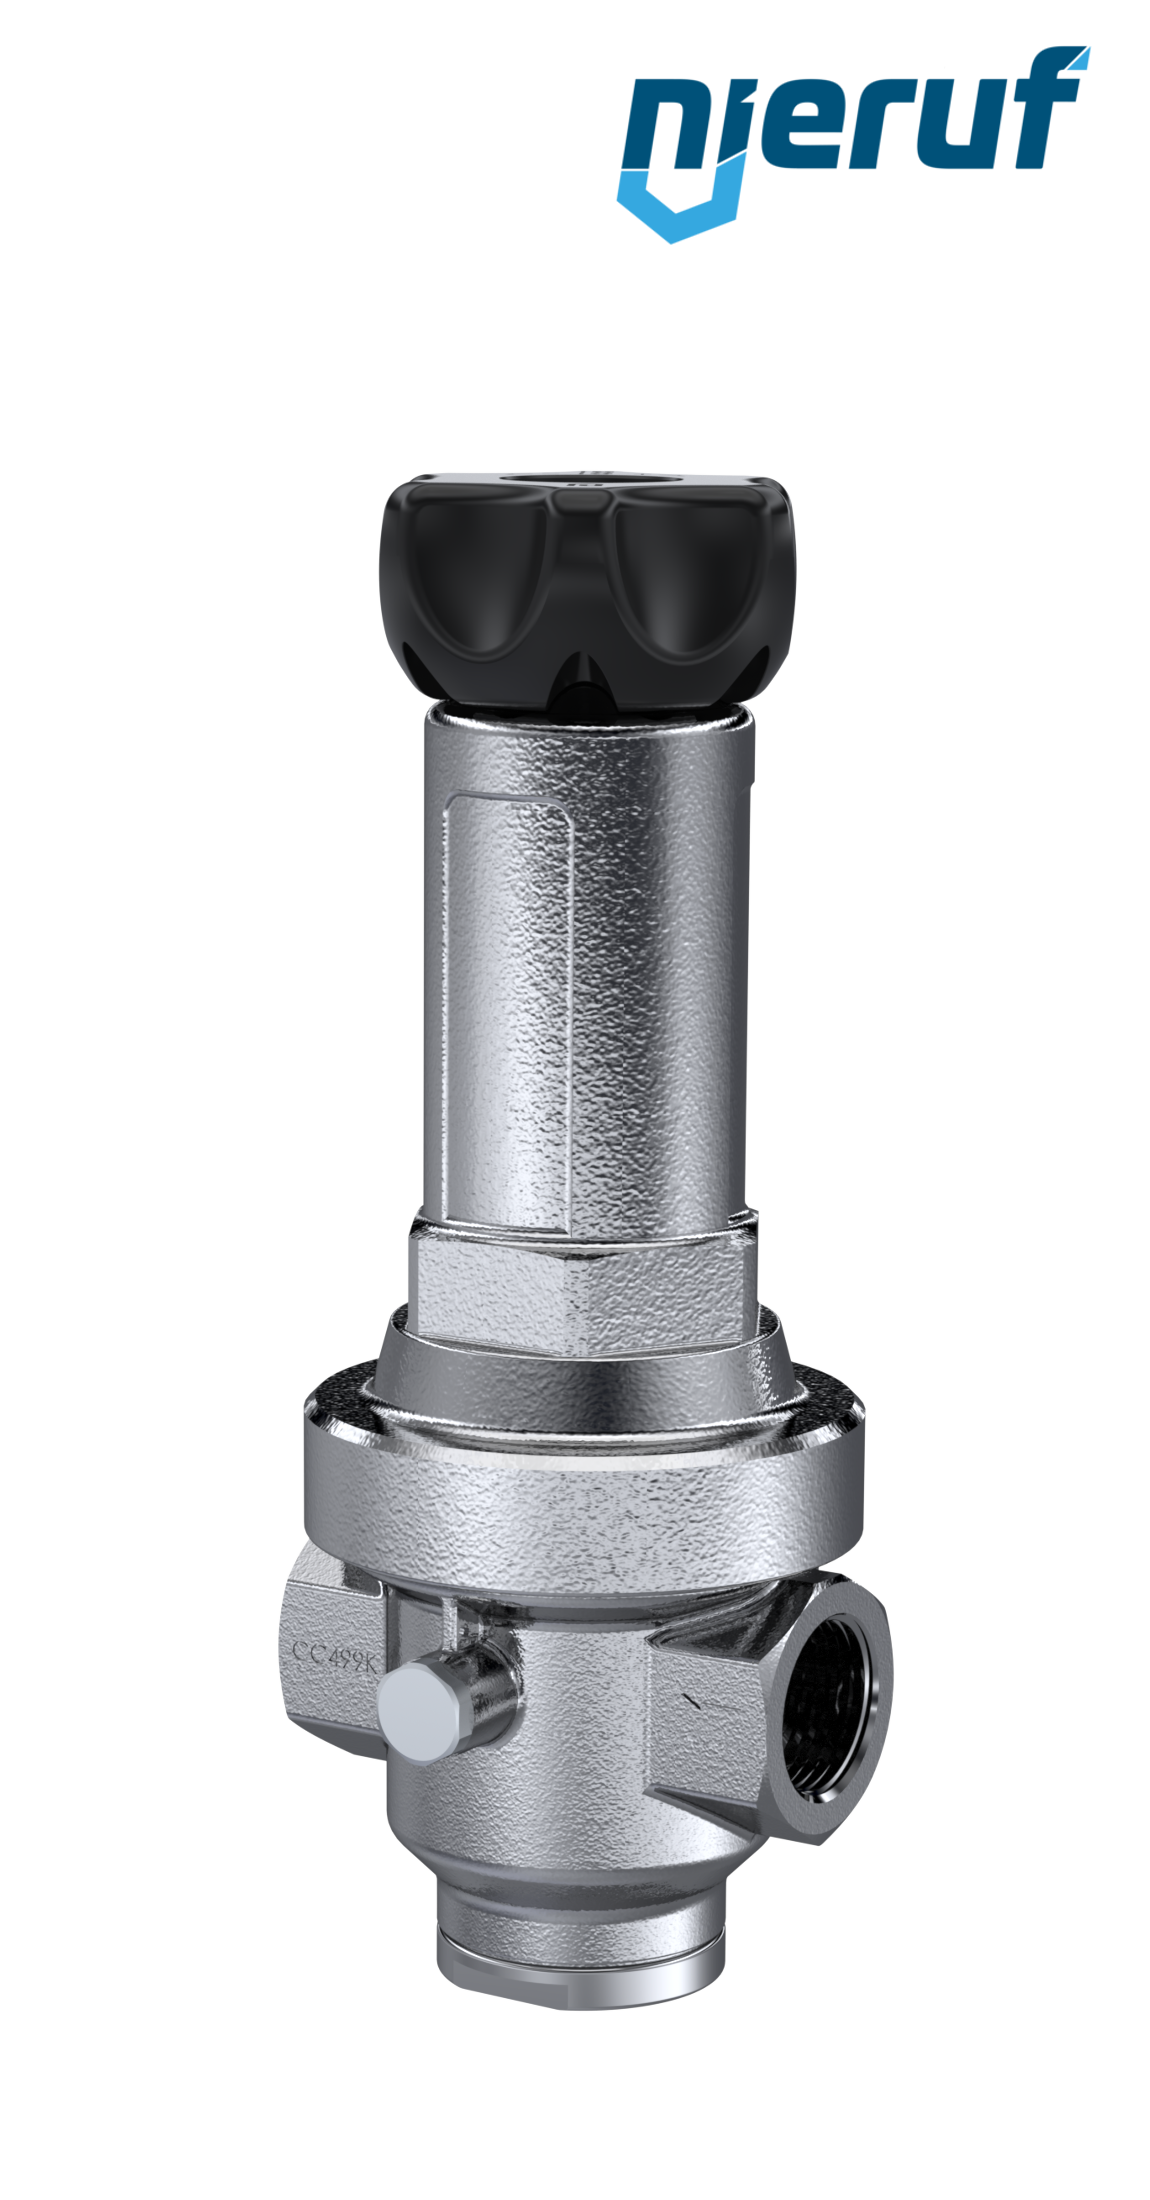 precision-pressure reducing valve 3/4" inch DM15 stainless steel EPDM 10.0 - 50.0 bar